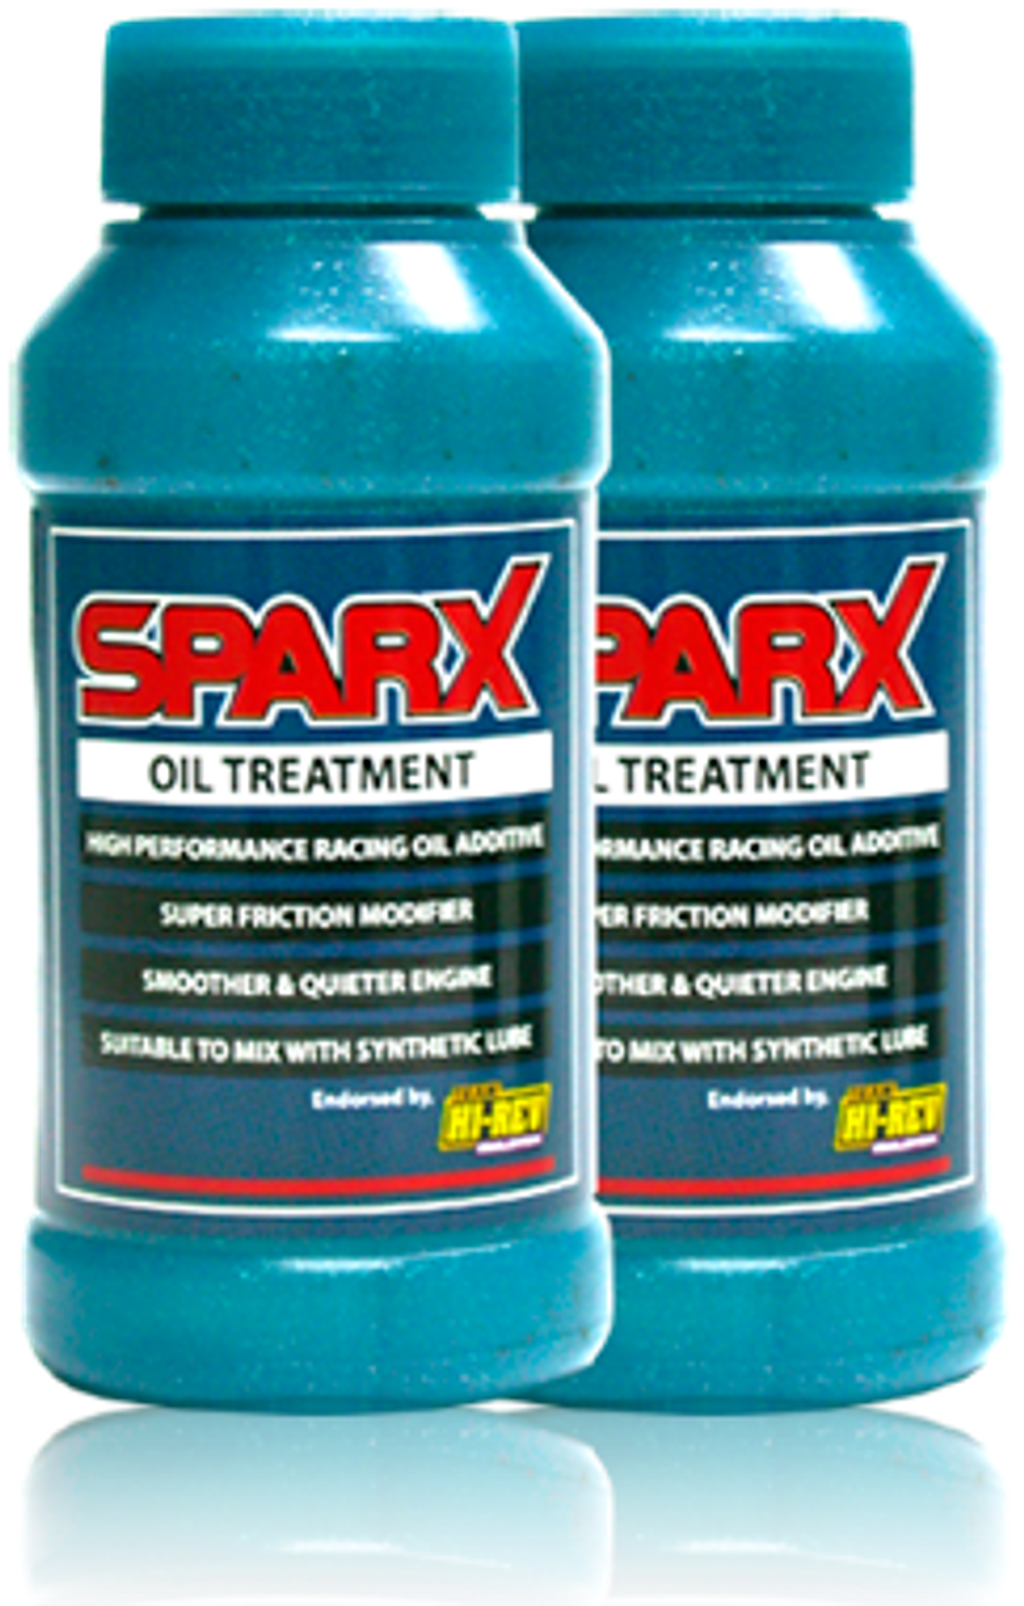 sparkx-oil-treatment.png